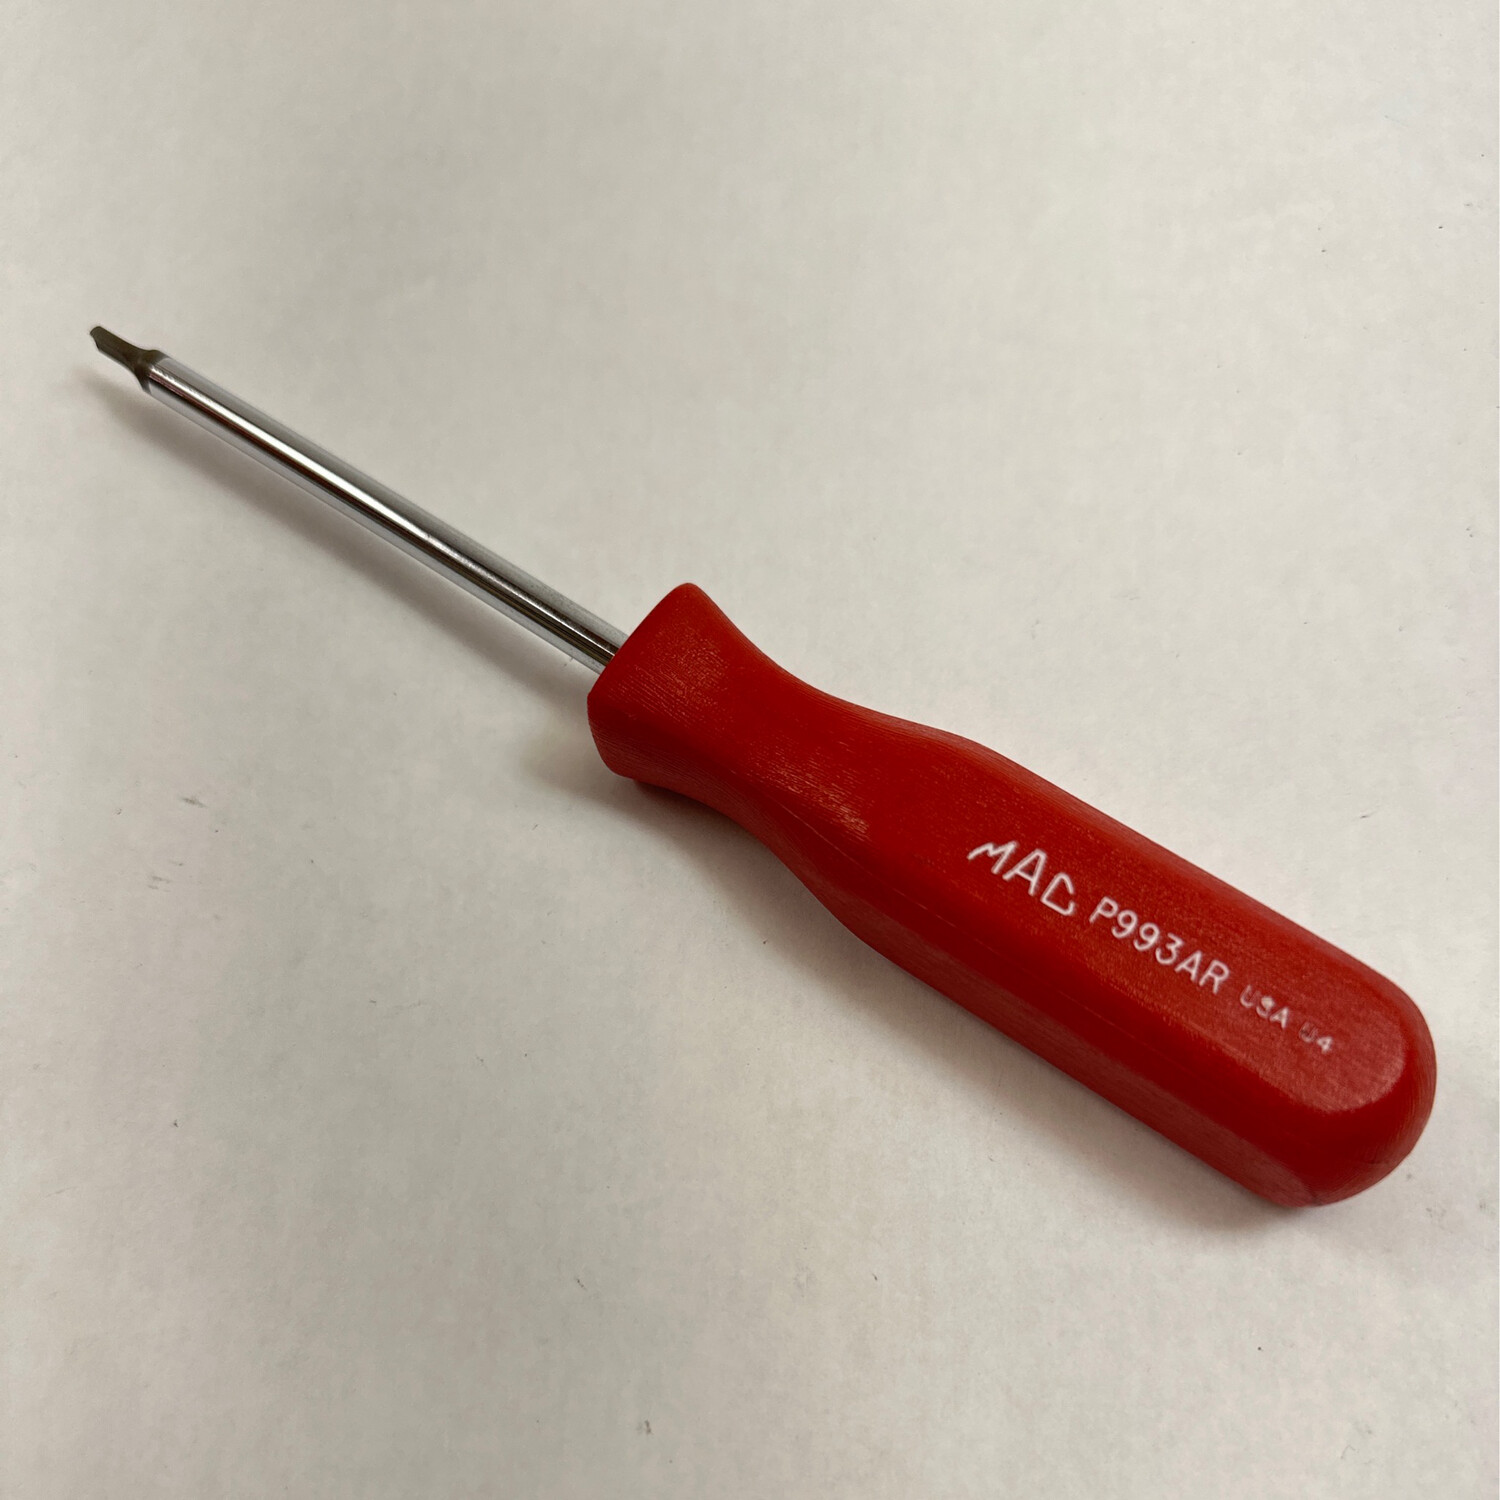 Mac Tools Clutch Fastener Screwdriver, P993AR